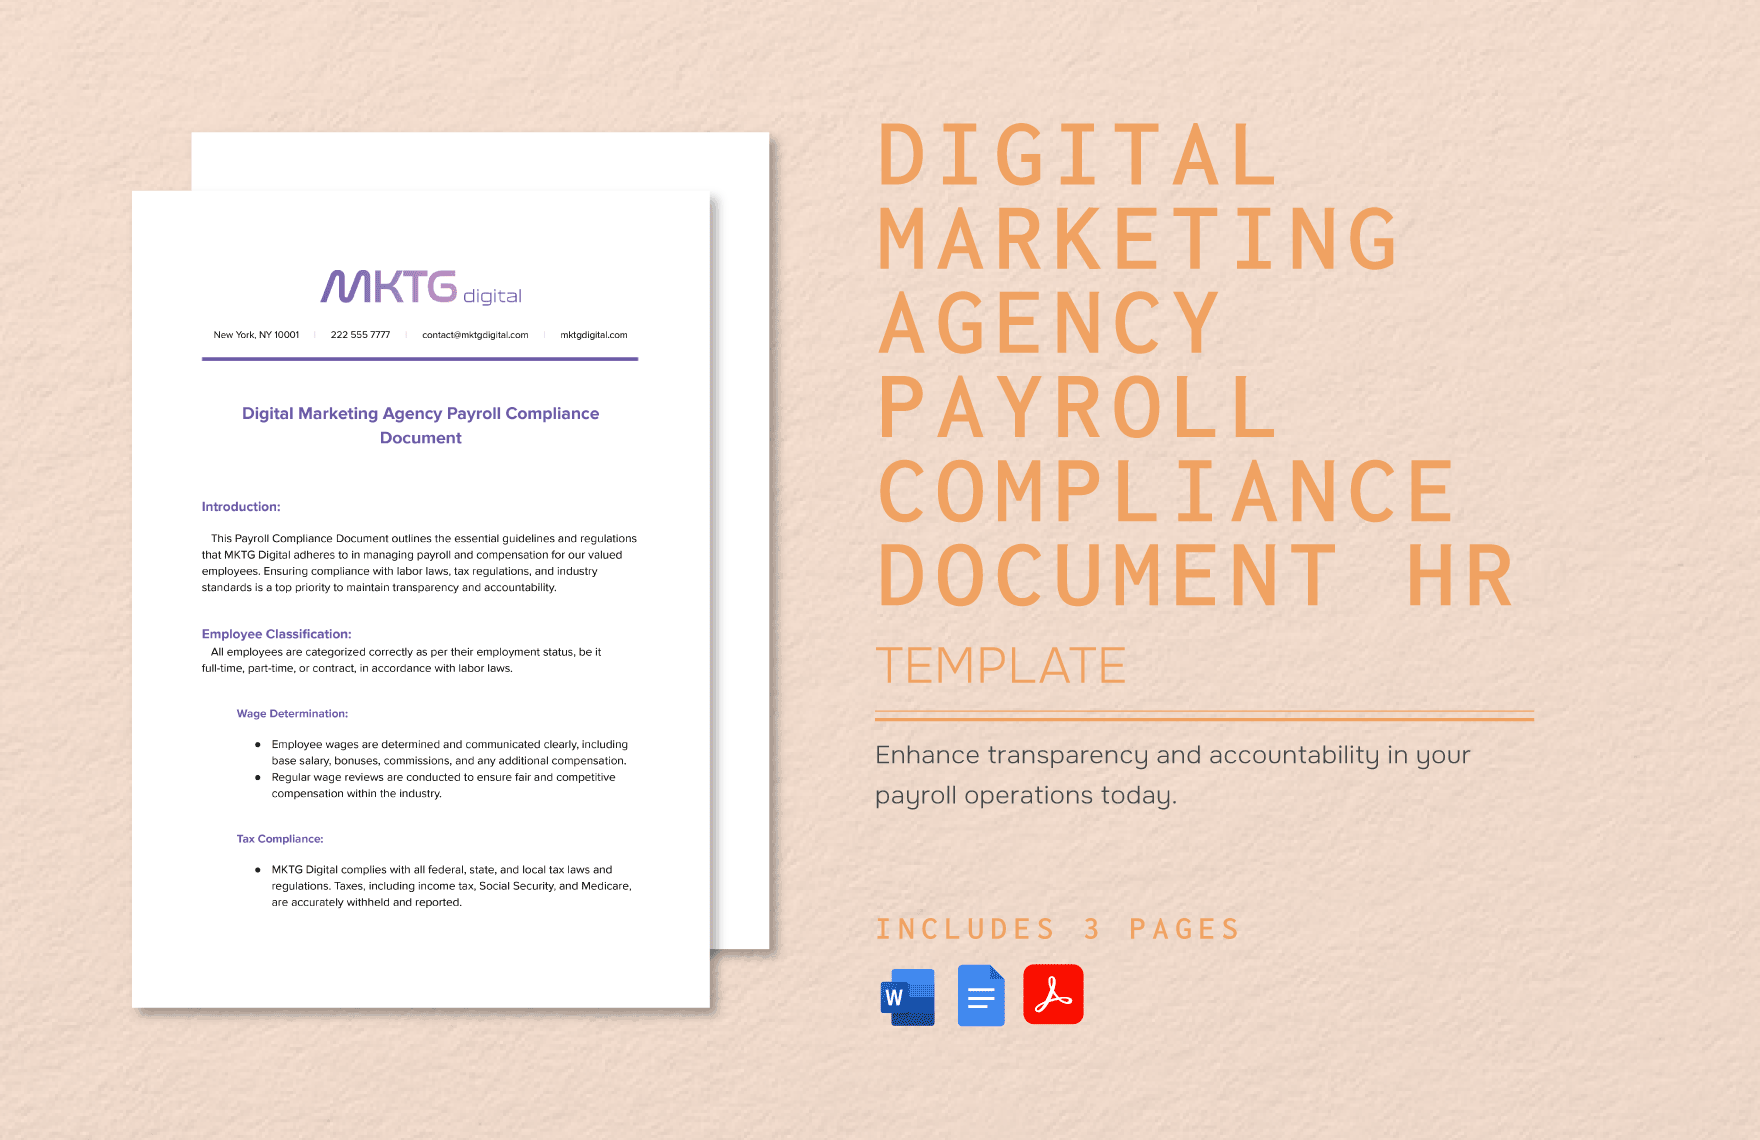 Digital Marketing Agency Payroll Compliance Document HR Template